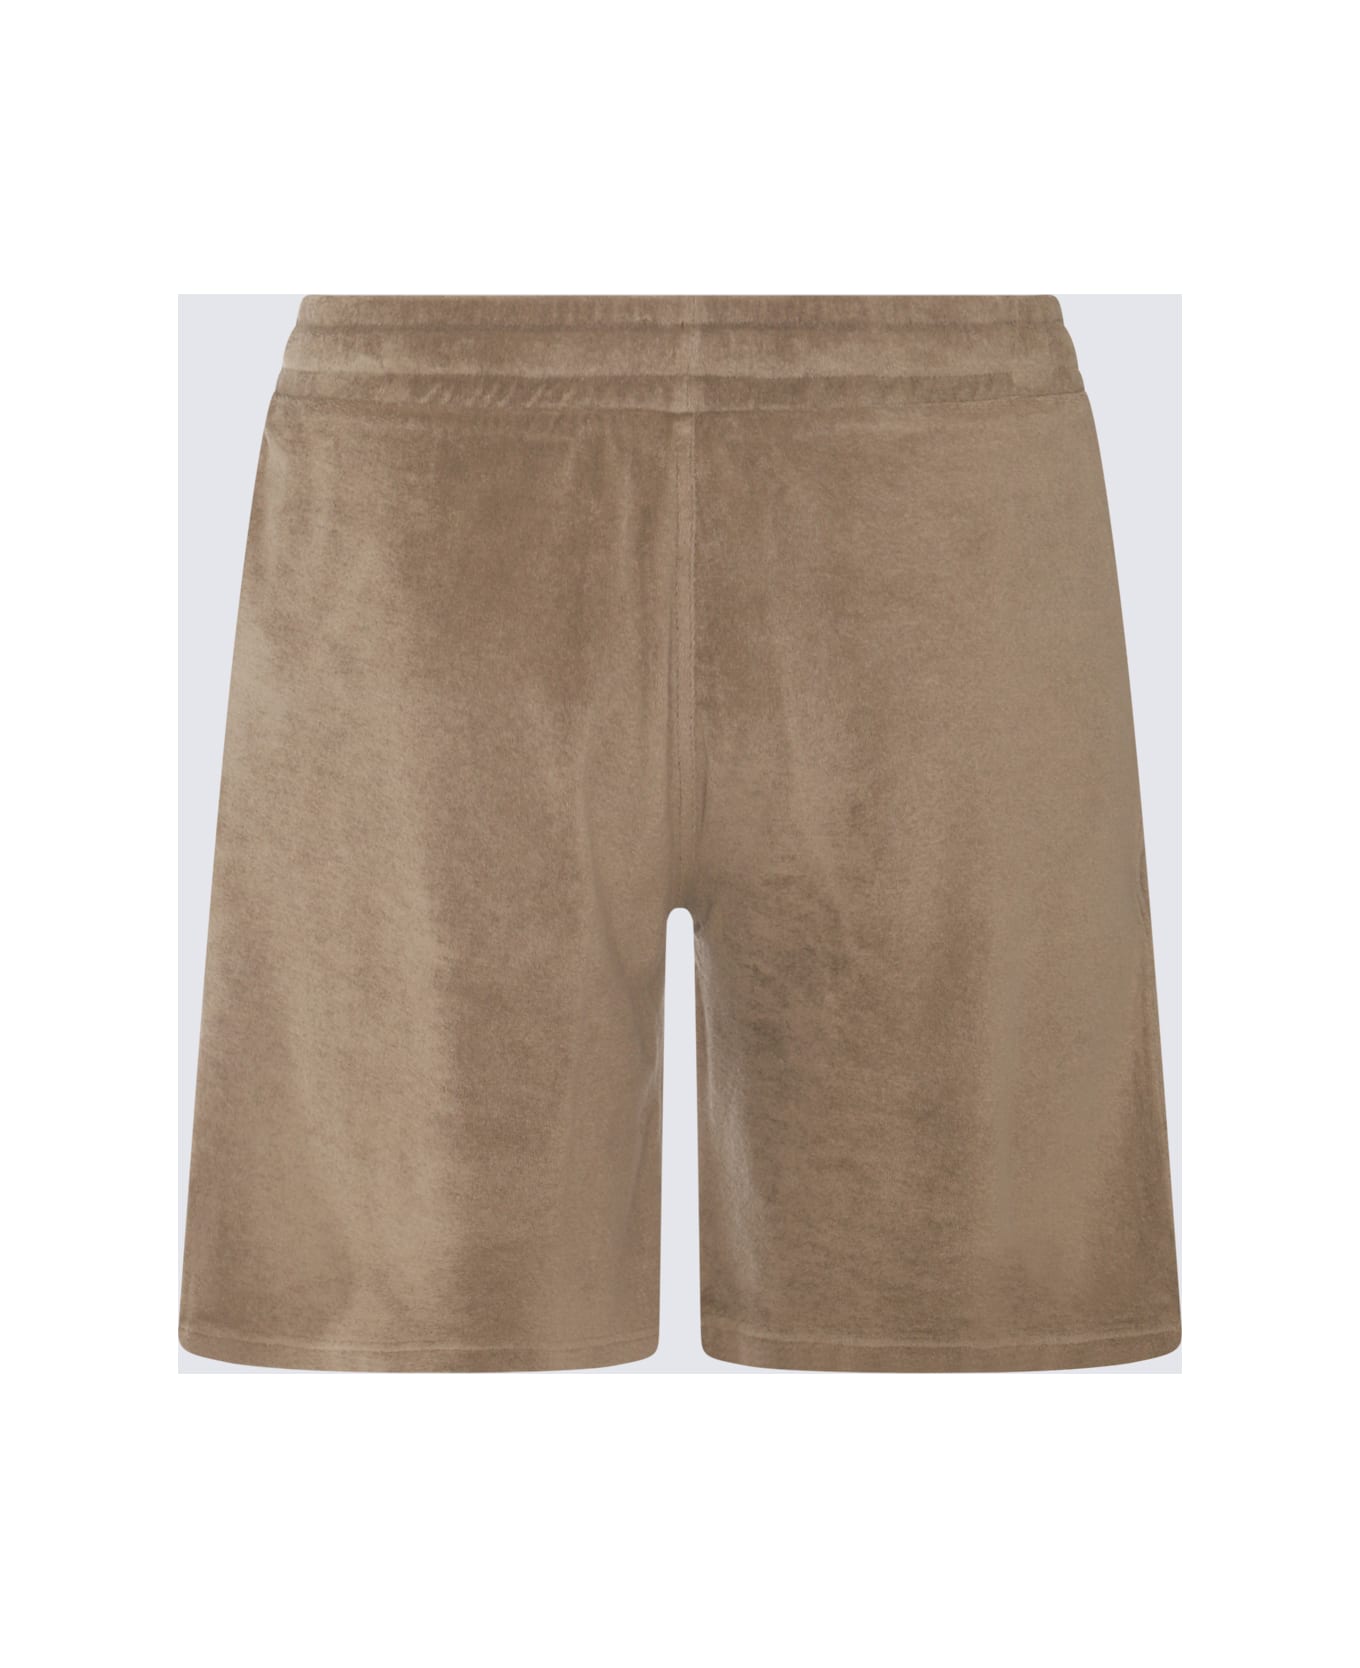 Altea Army Cotton Shorts - Army